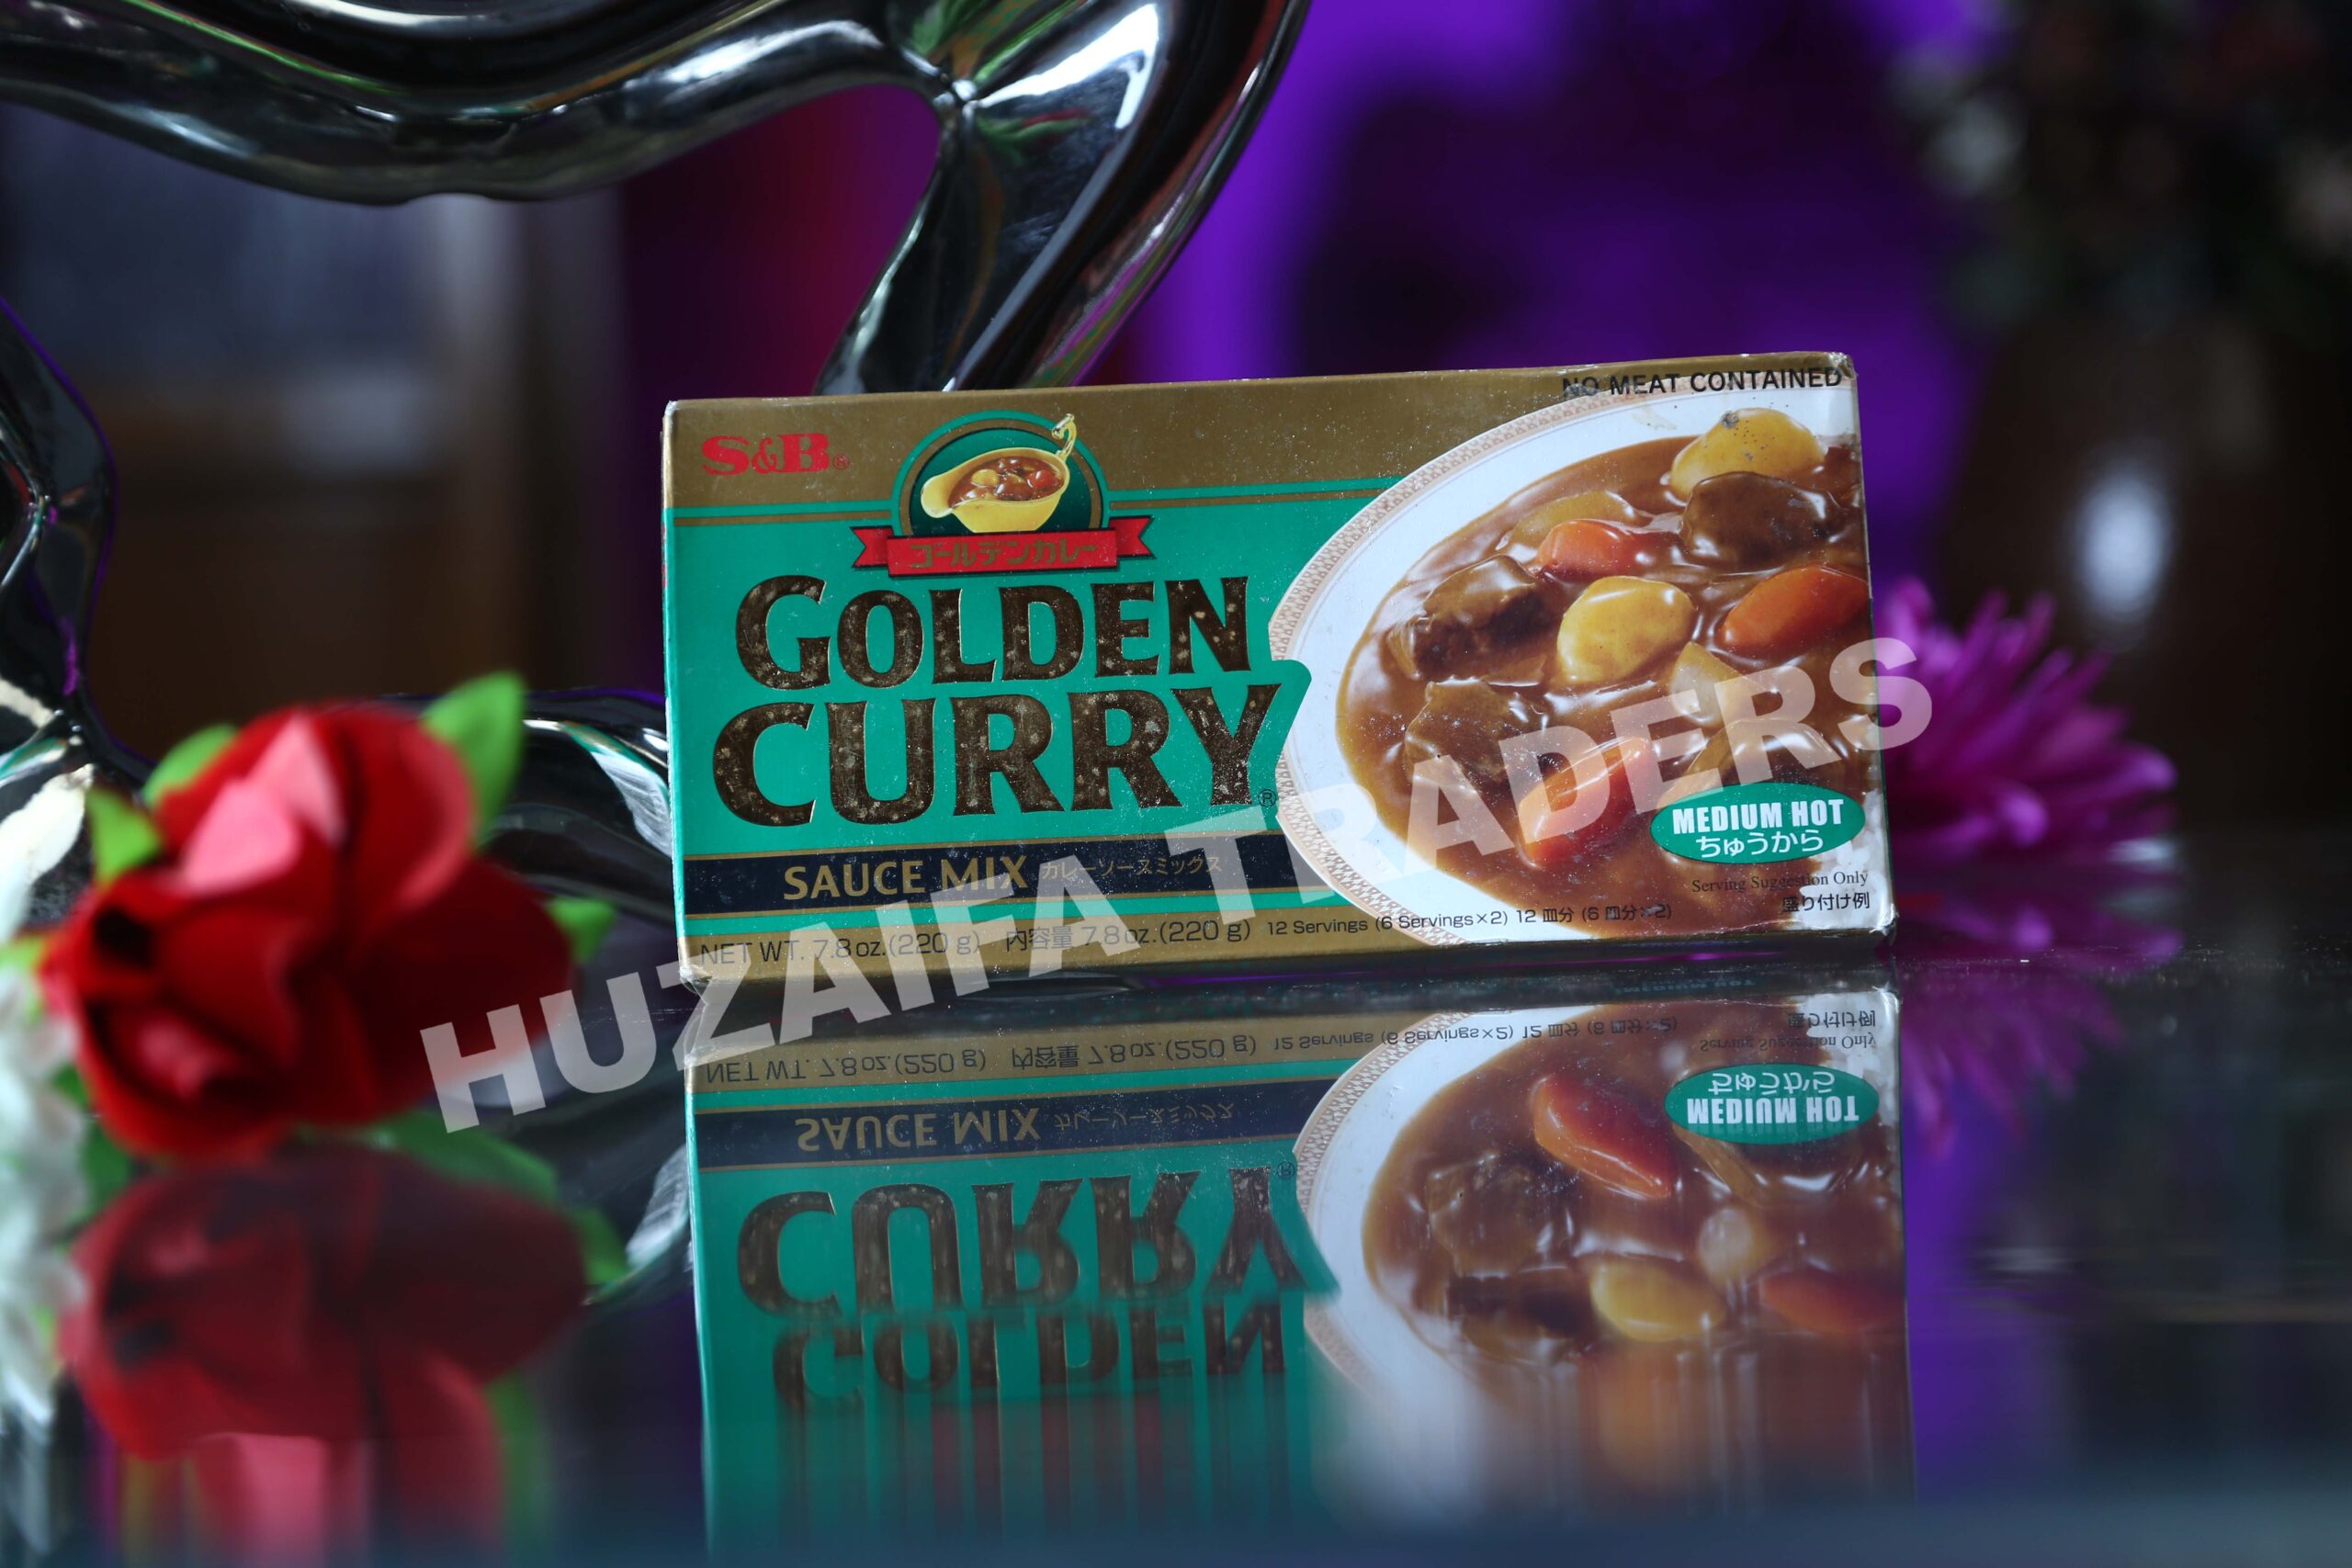 Golden-curry-sauce-Mix-230gm